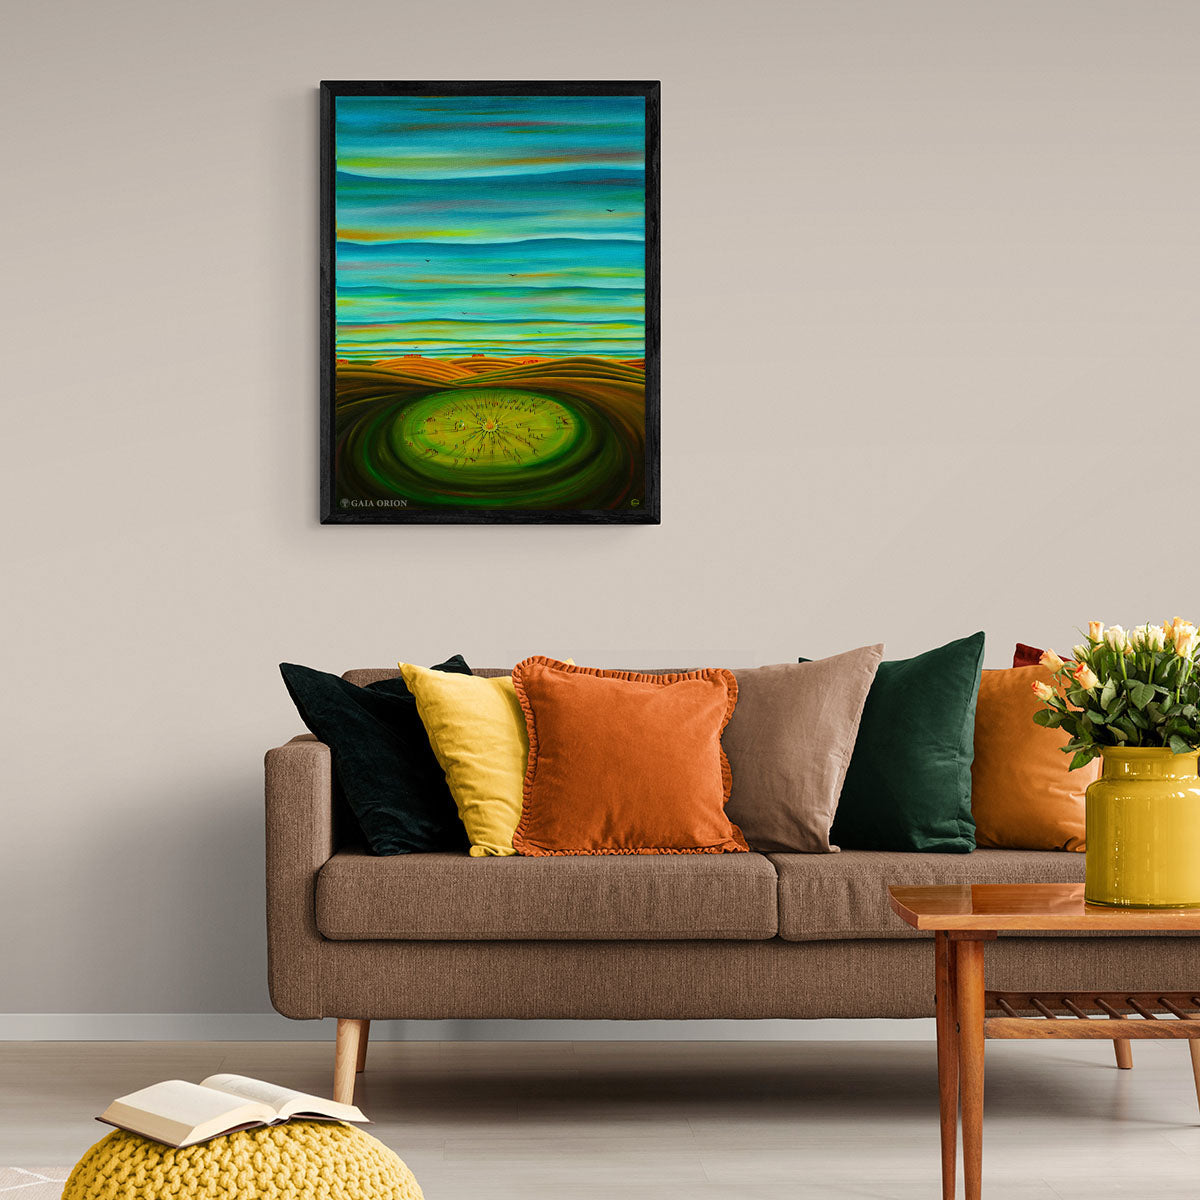 Choose your Image "Awakening Landscapes - Prints on canvas - Gaia Orion Art